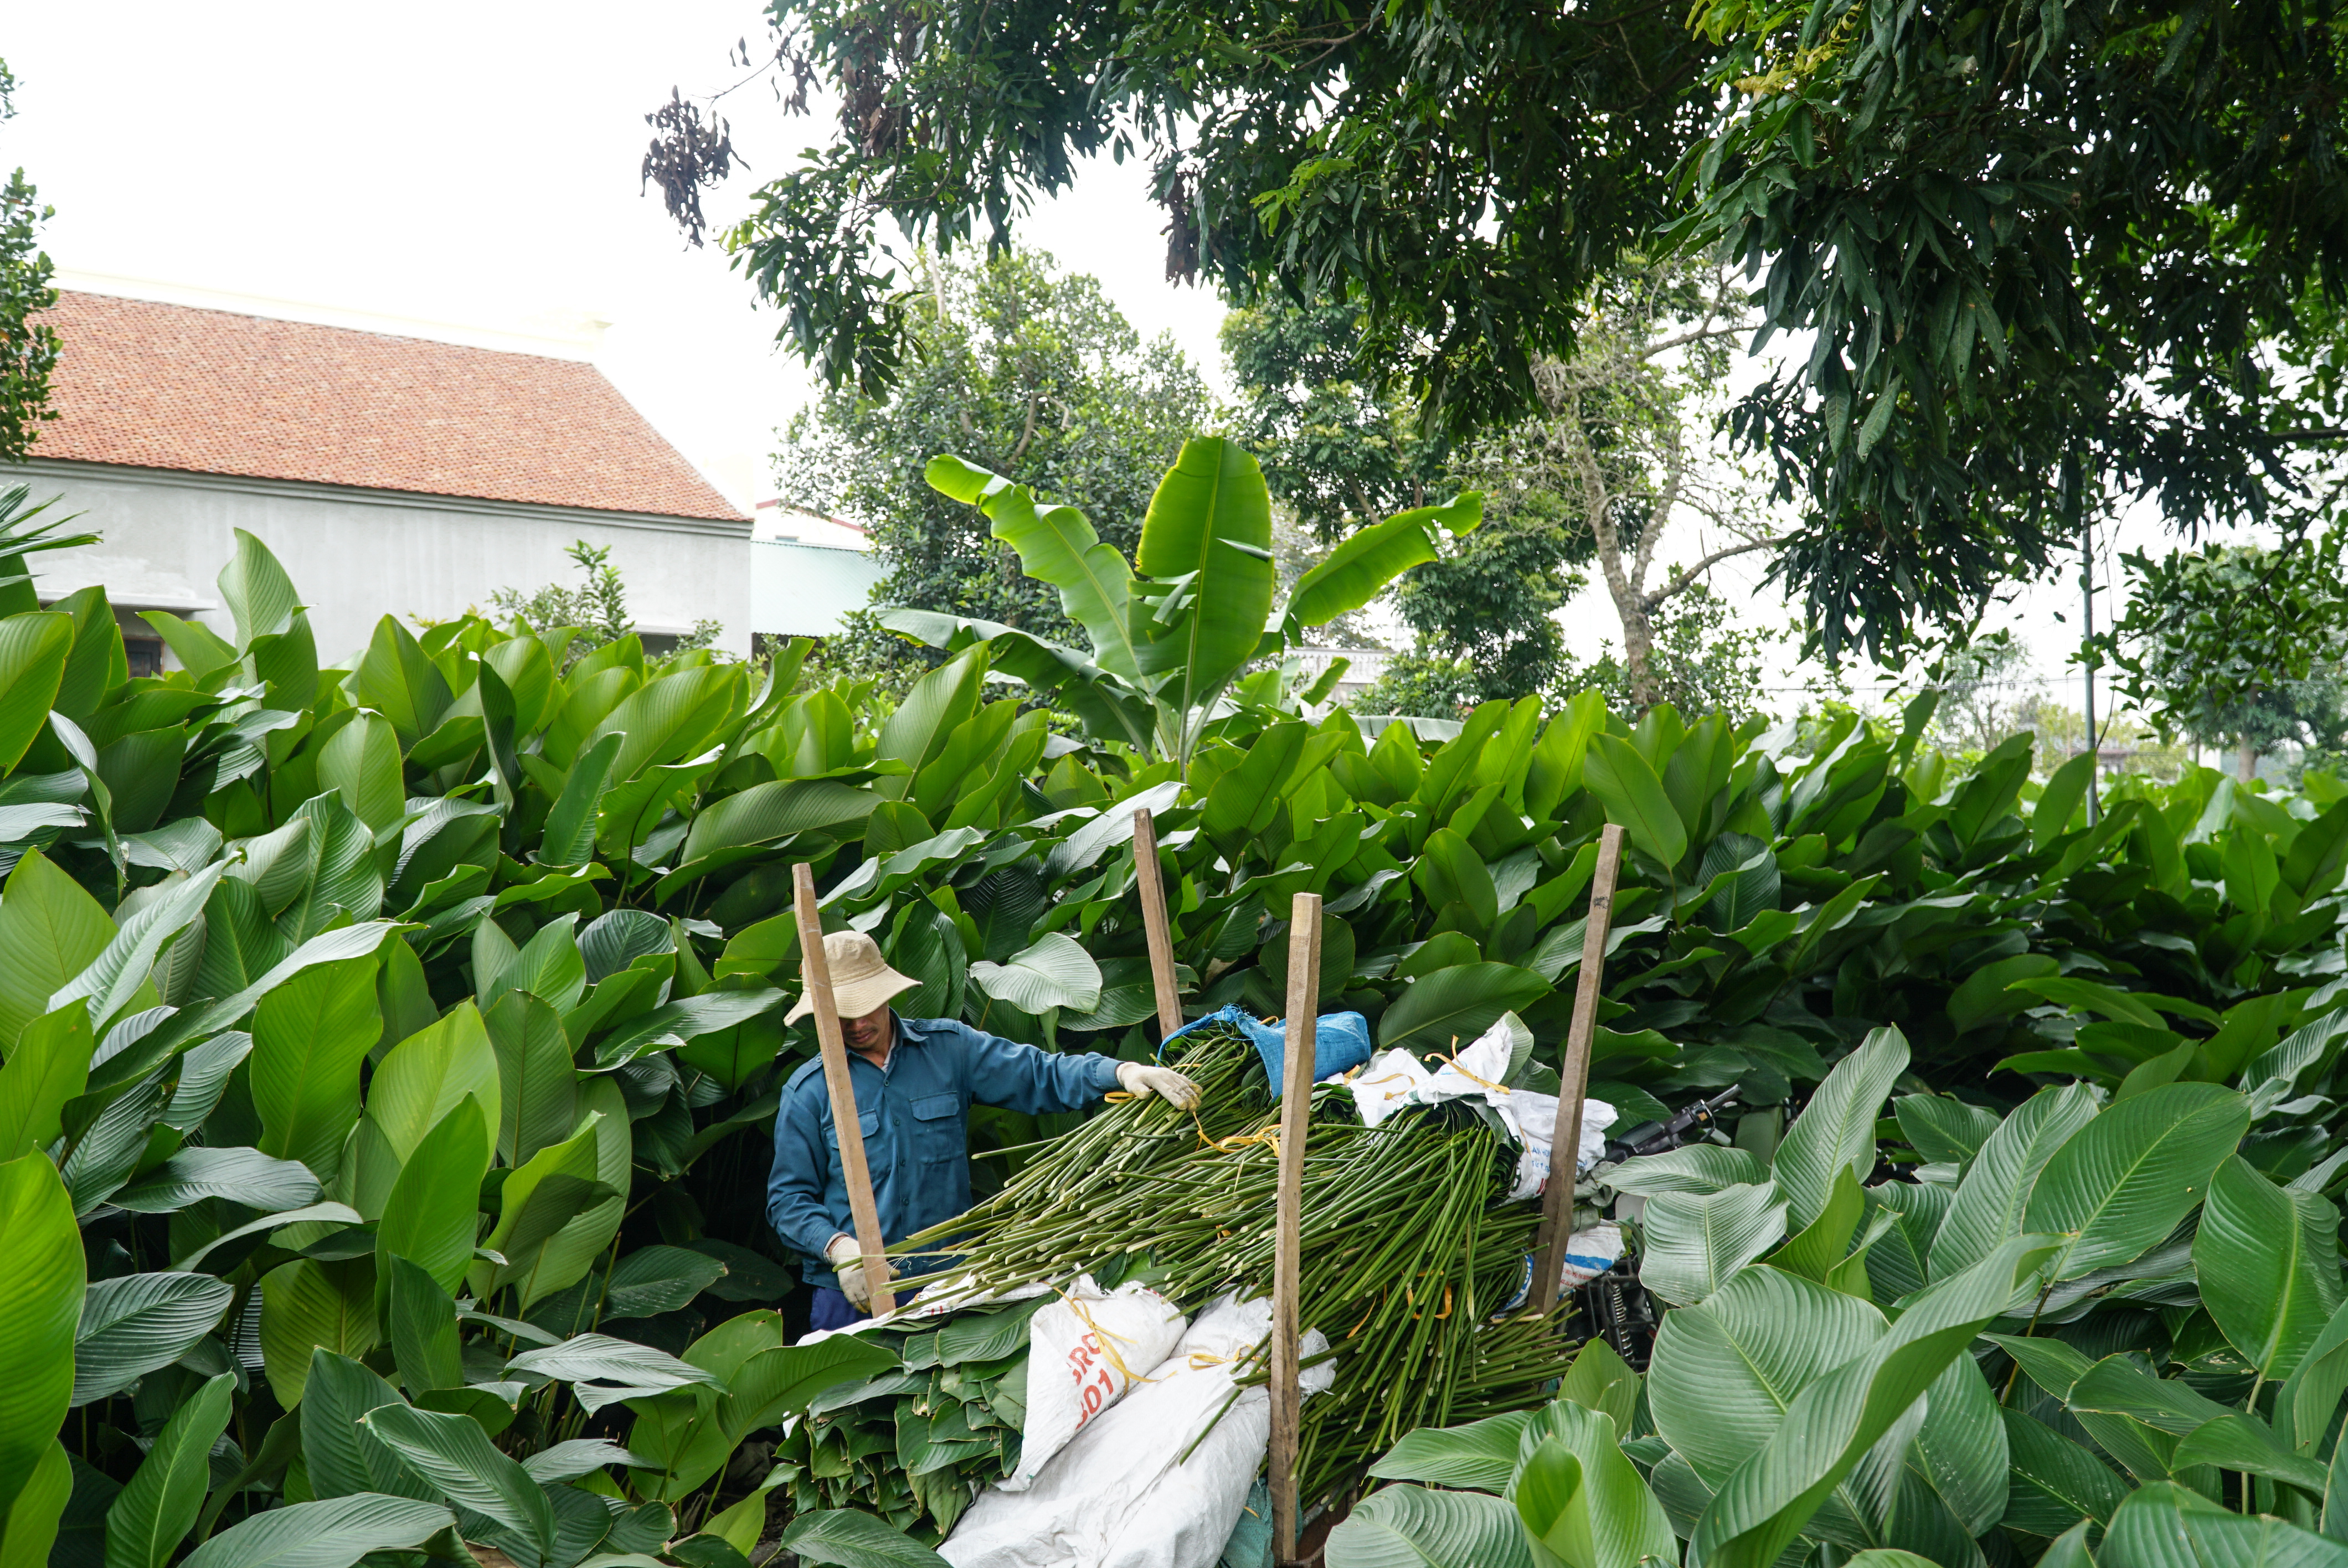 Hanoi villagers harvest ‘dong’ leaves for tasty Tet holiday treats